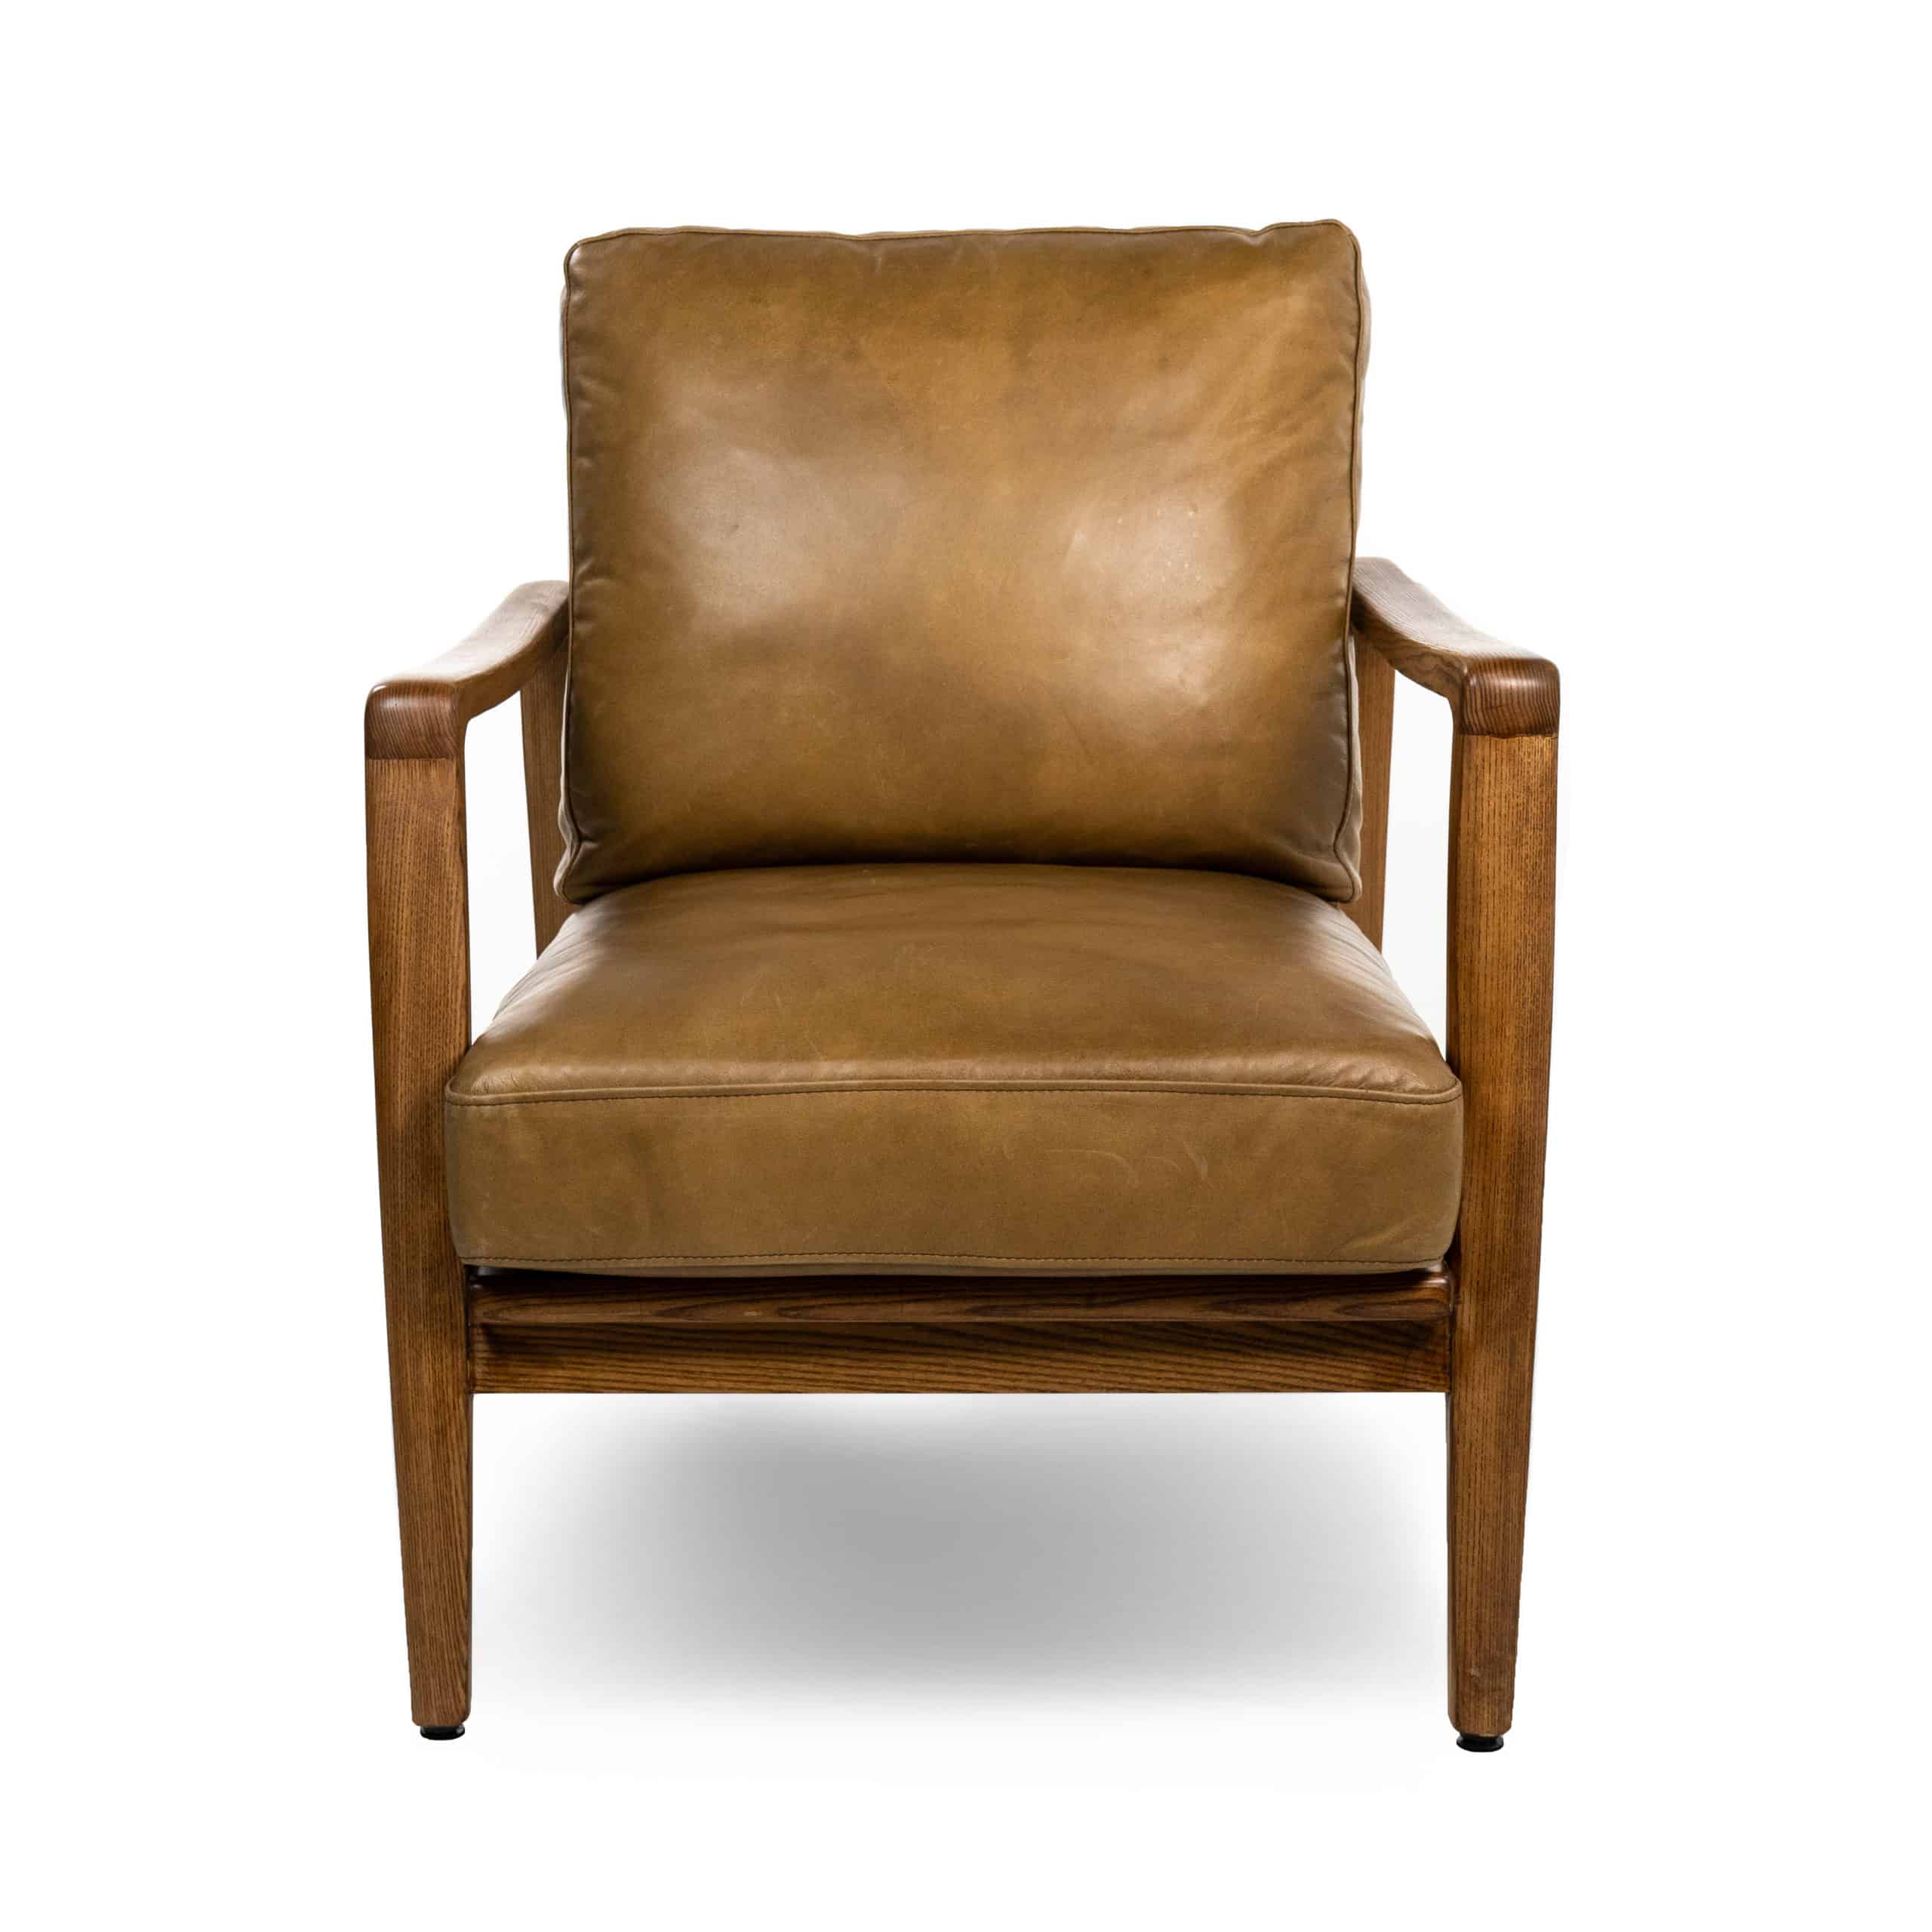 Craftsman Lounge Chair - Tan Leather